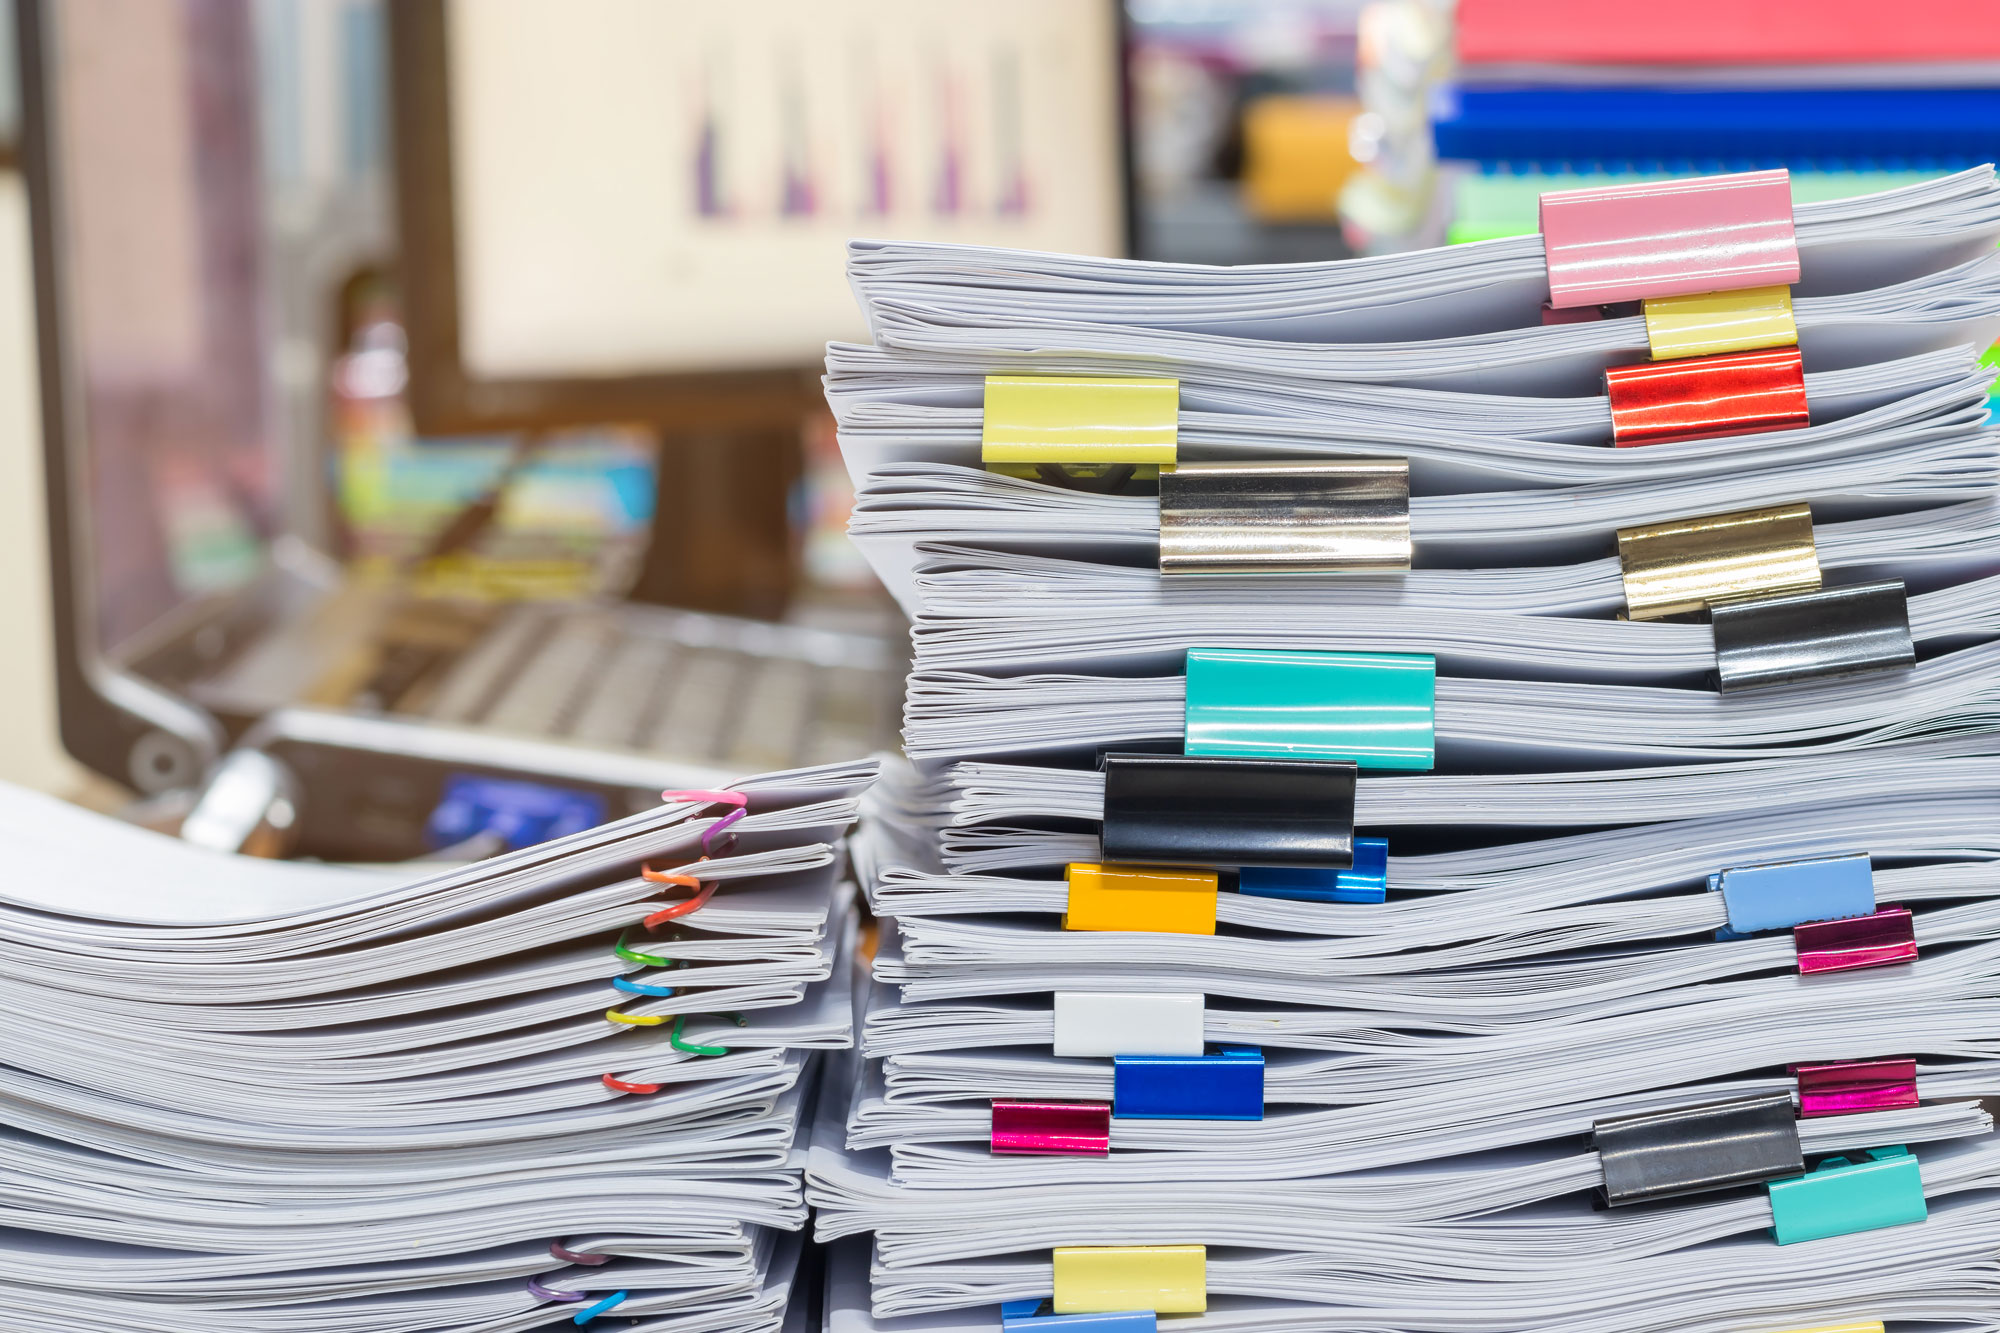 SMET - Standard Application Guides paperwork stacked on desk